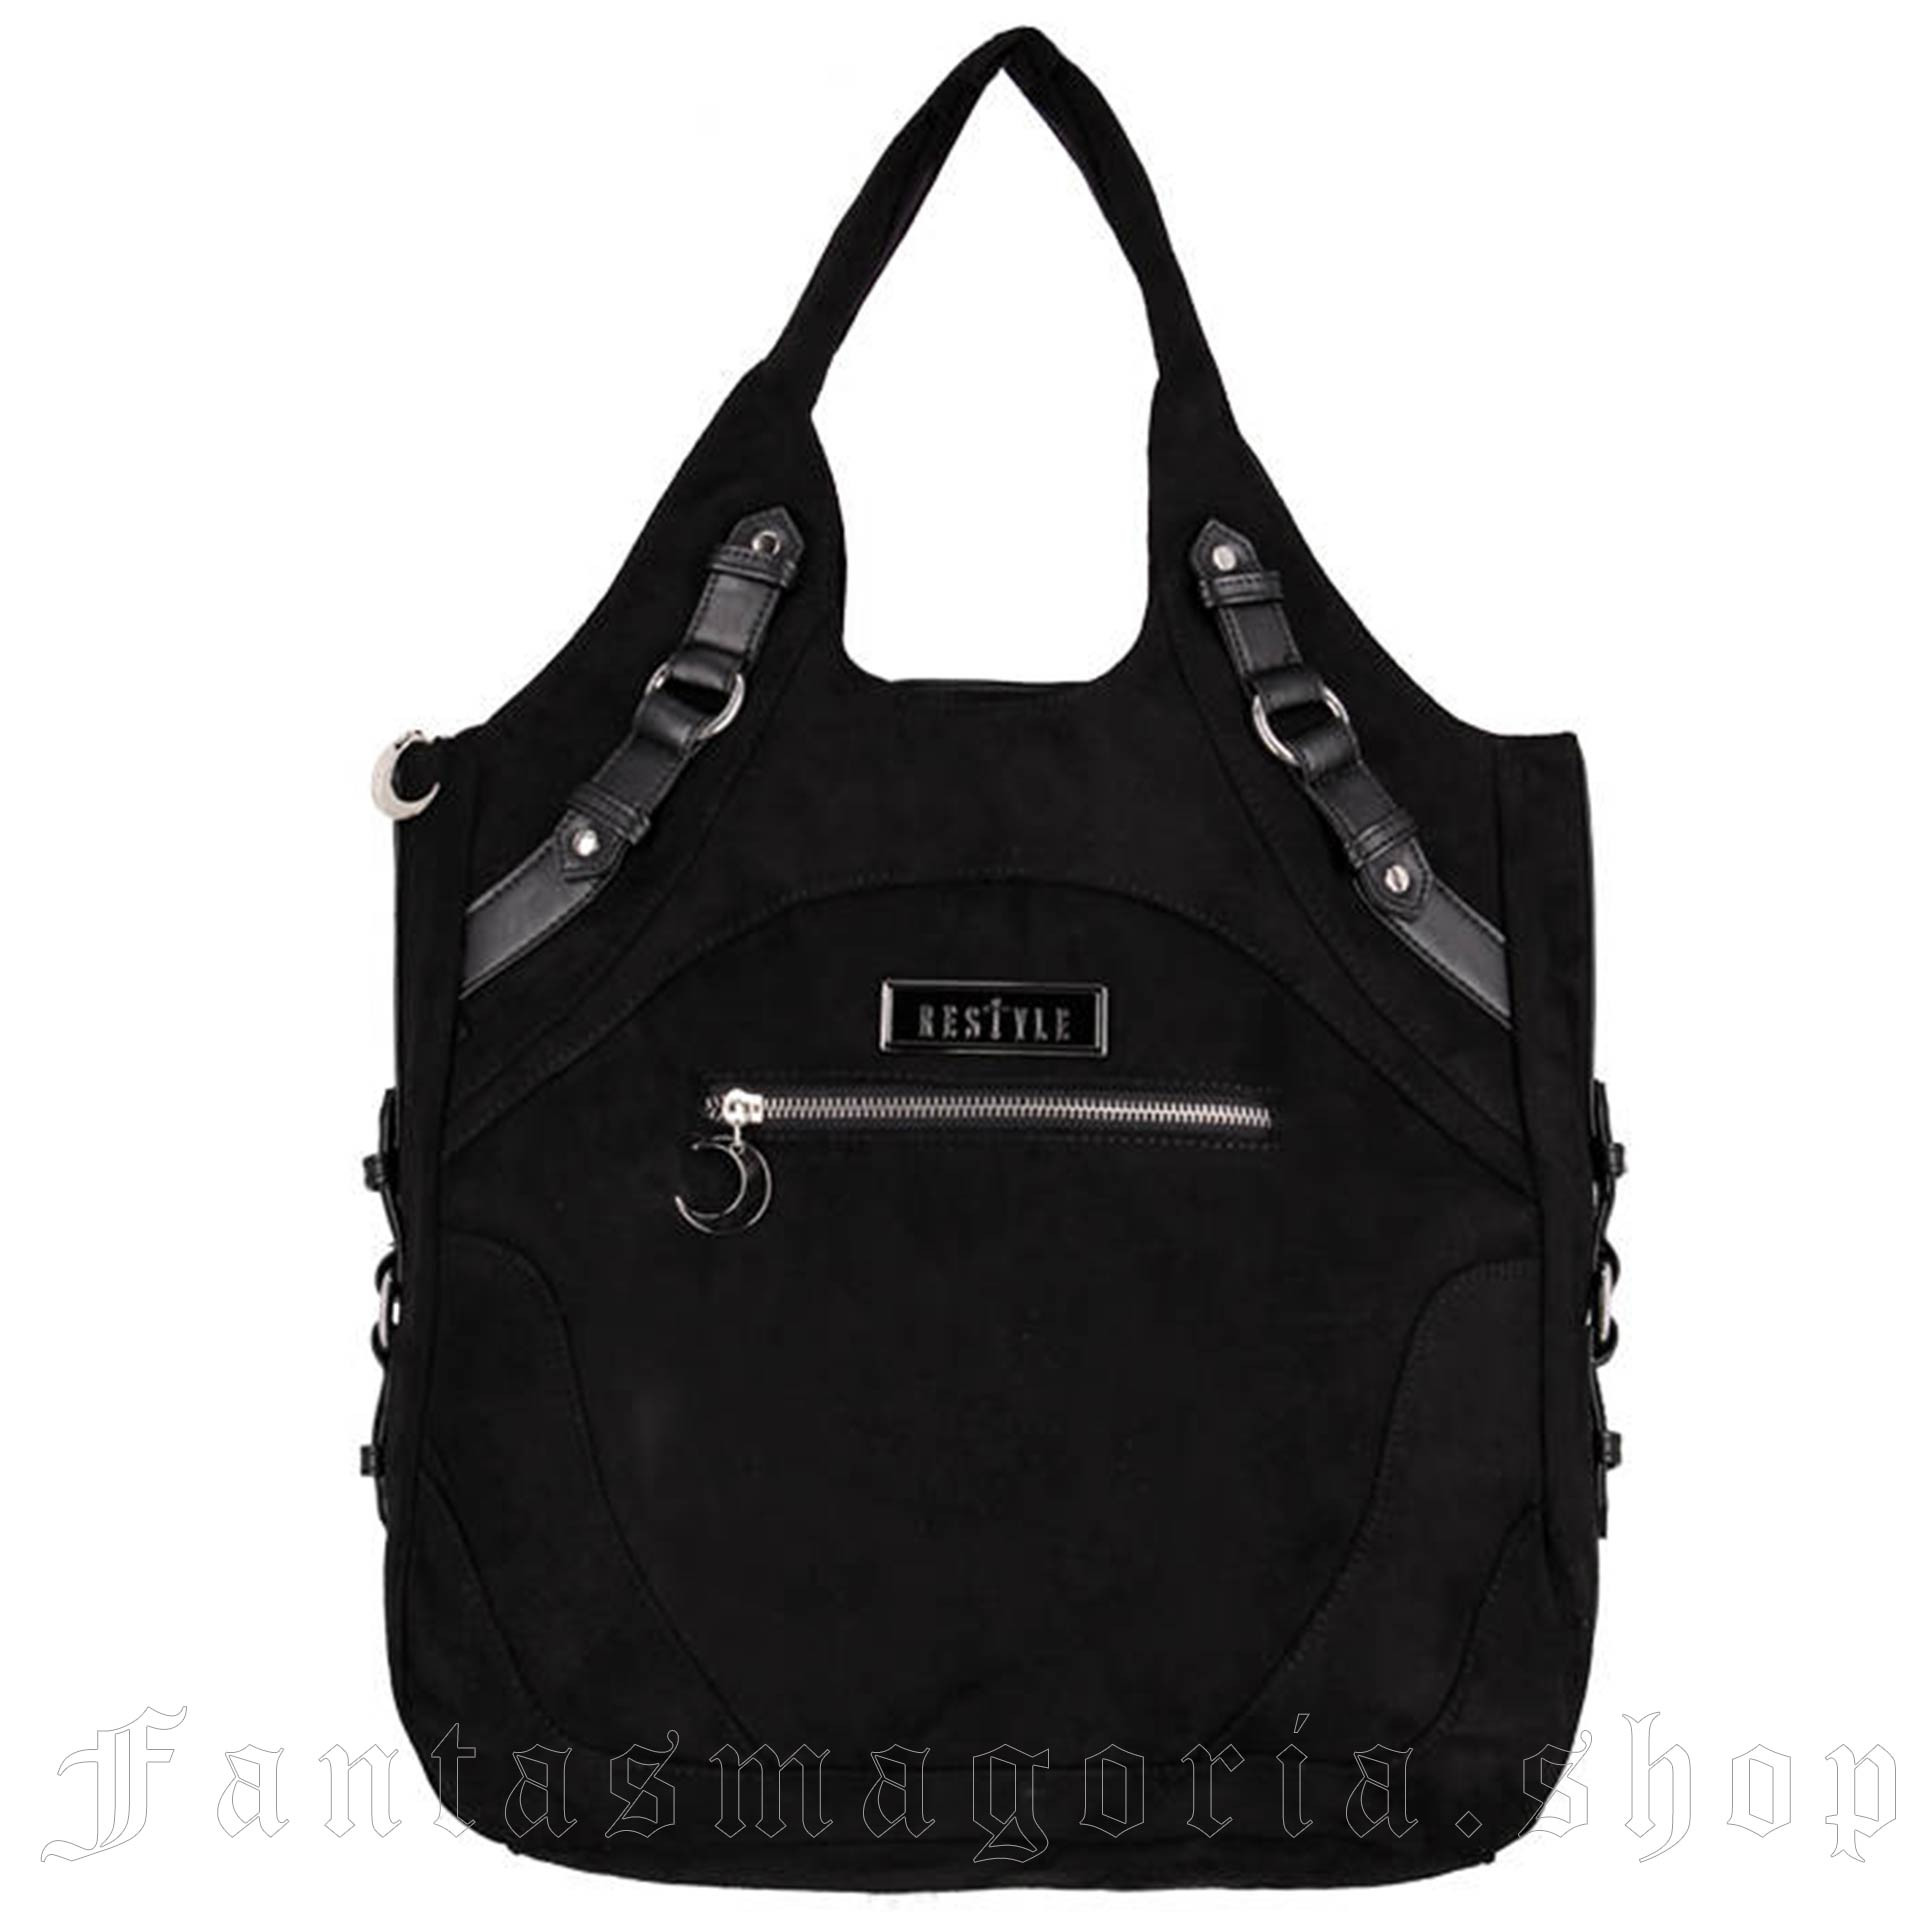 Harness Handbag by Restyle brand